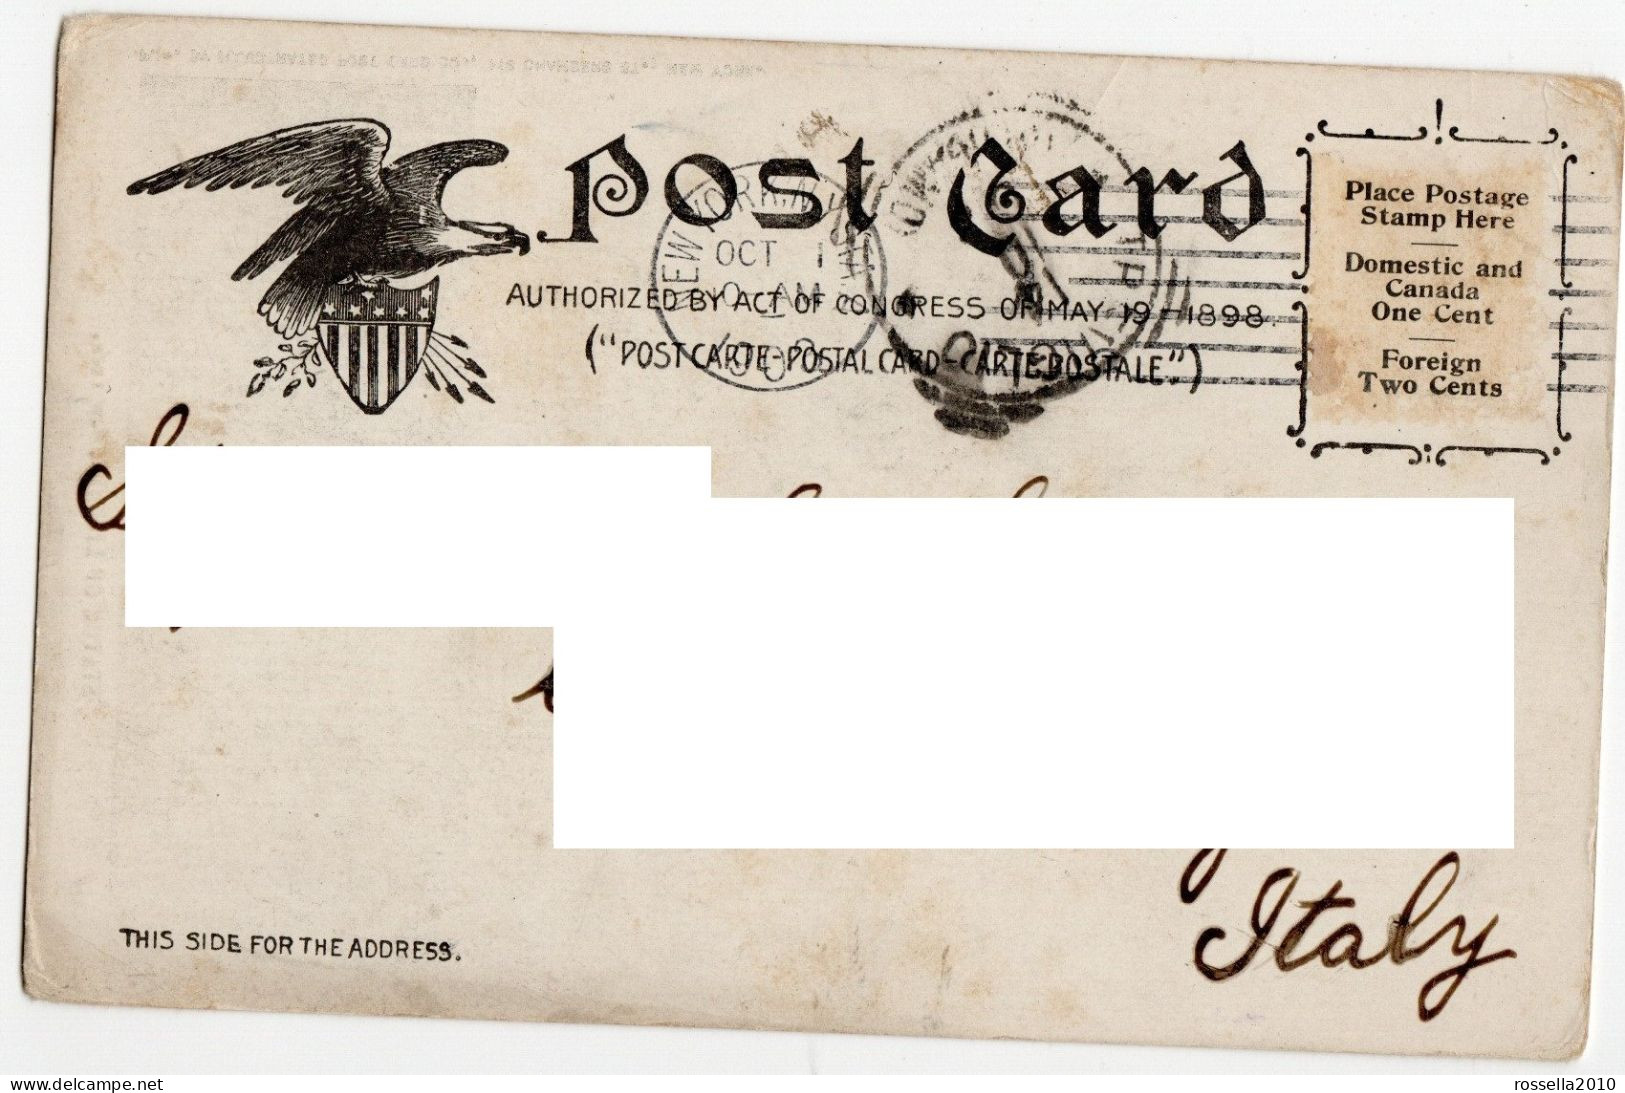 CARTOLINA AMERICA USA NEW YORK STATUE OF LIBERTY Postcard - Freiheitsstatue